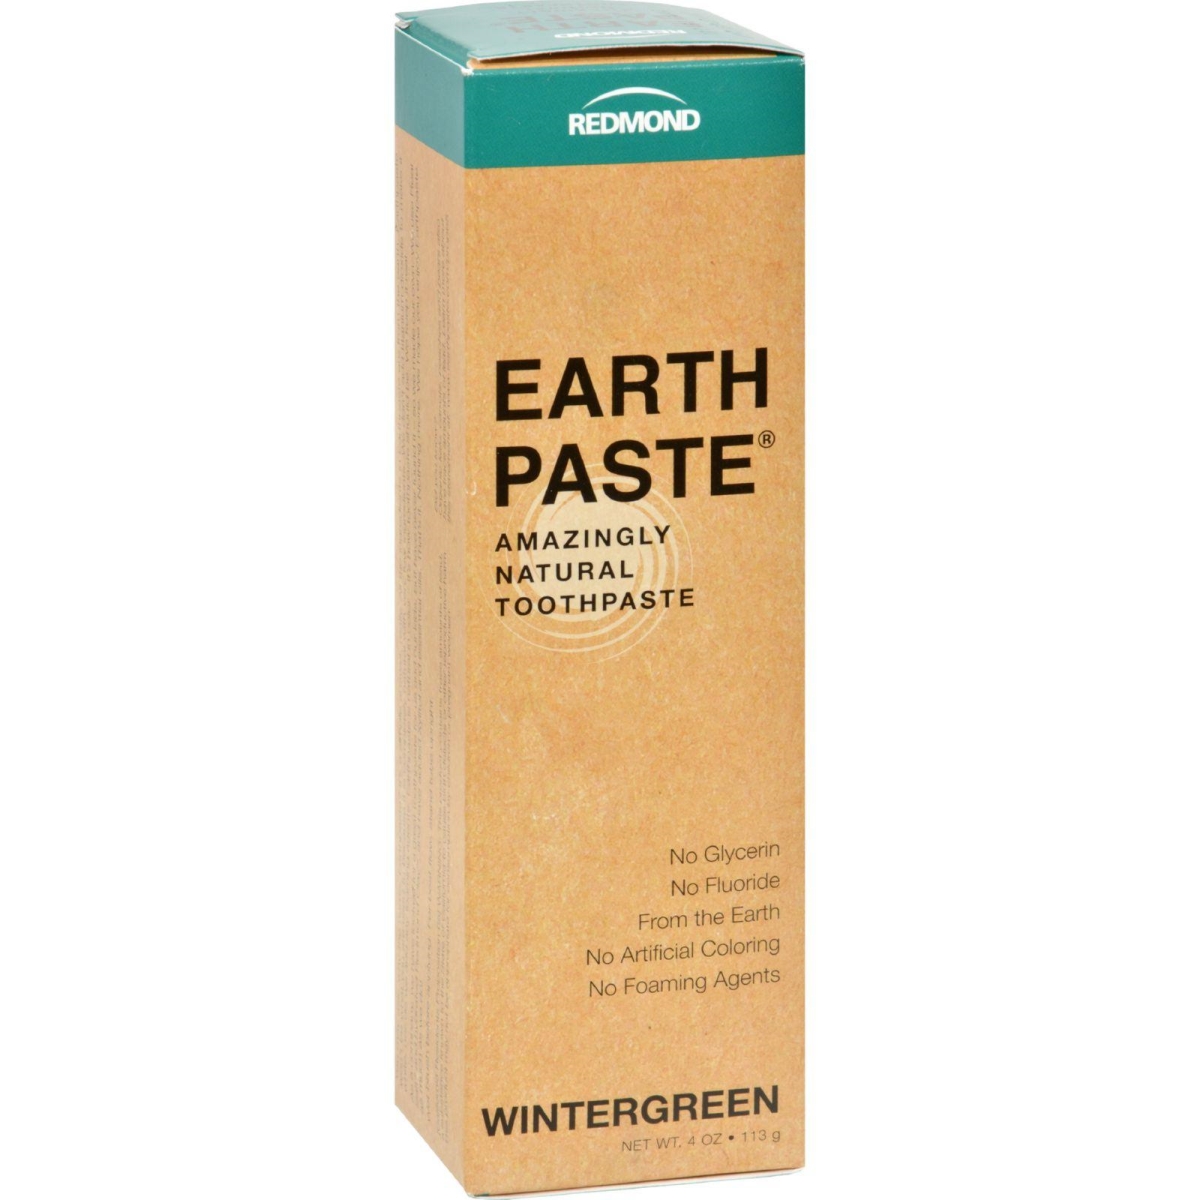 Hg1112184 4 Oz Earthpaste Natural Toothpaste - Wintergreen